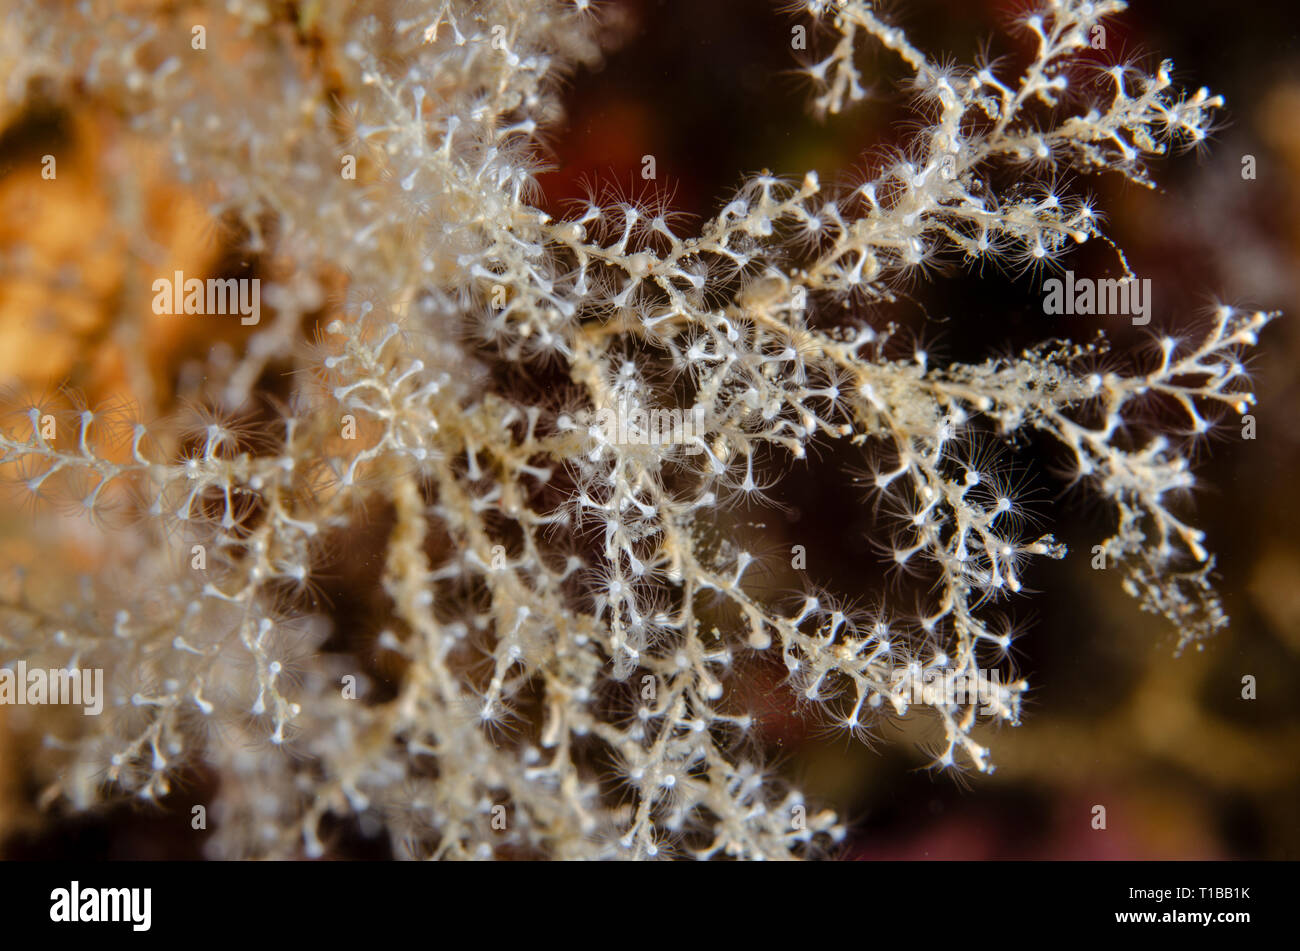 Thecate hydrozoans, Sertularella crassicaulis, Sertulariidae. , Tor Paterno Marine Protected Area, Rome, Italy, Mediterranean Sea Stock Photo